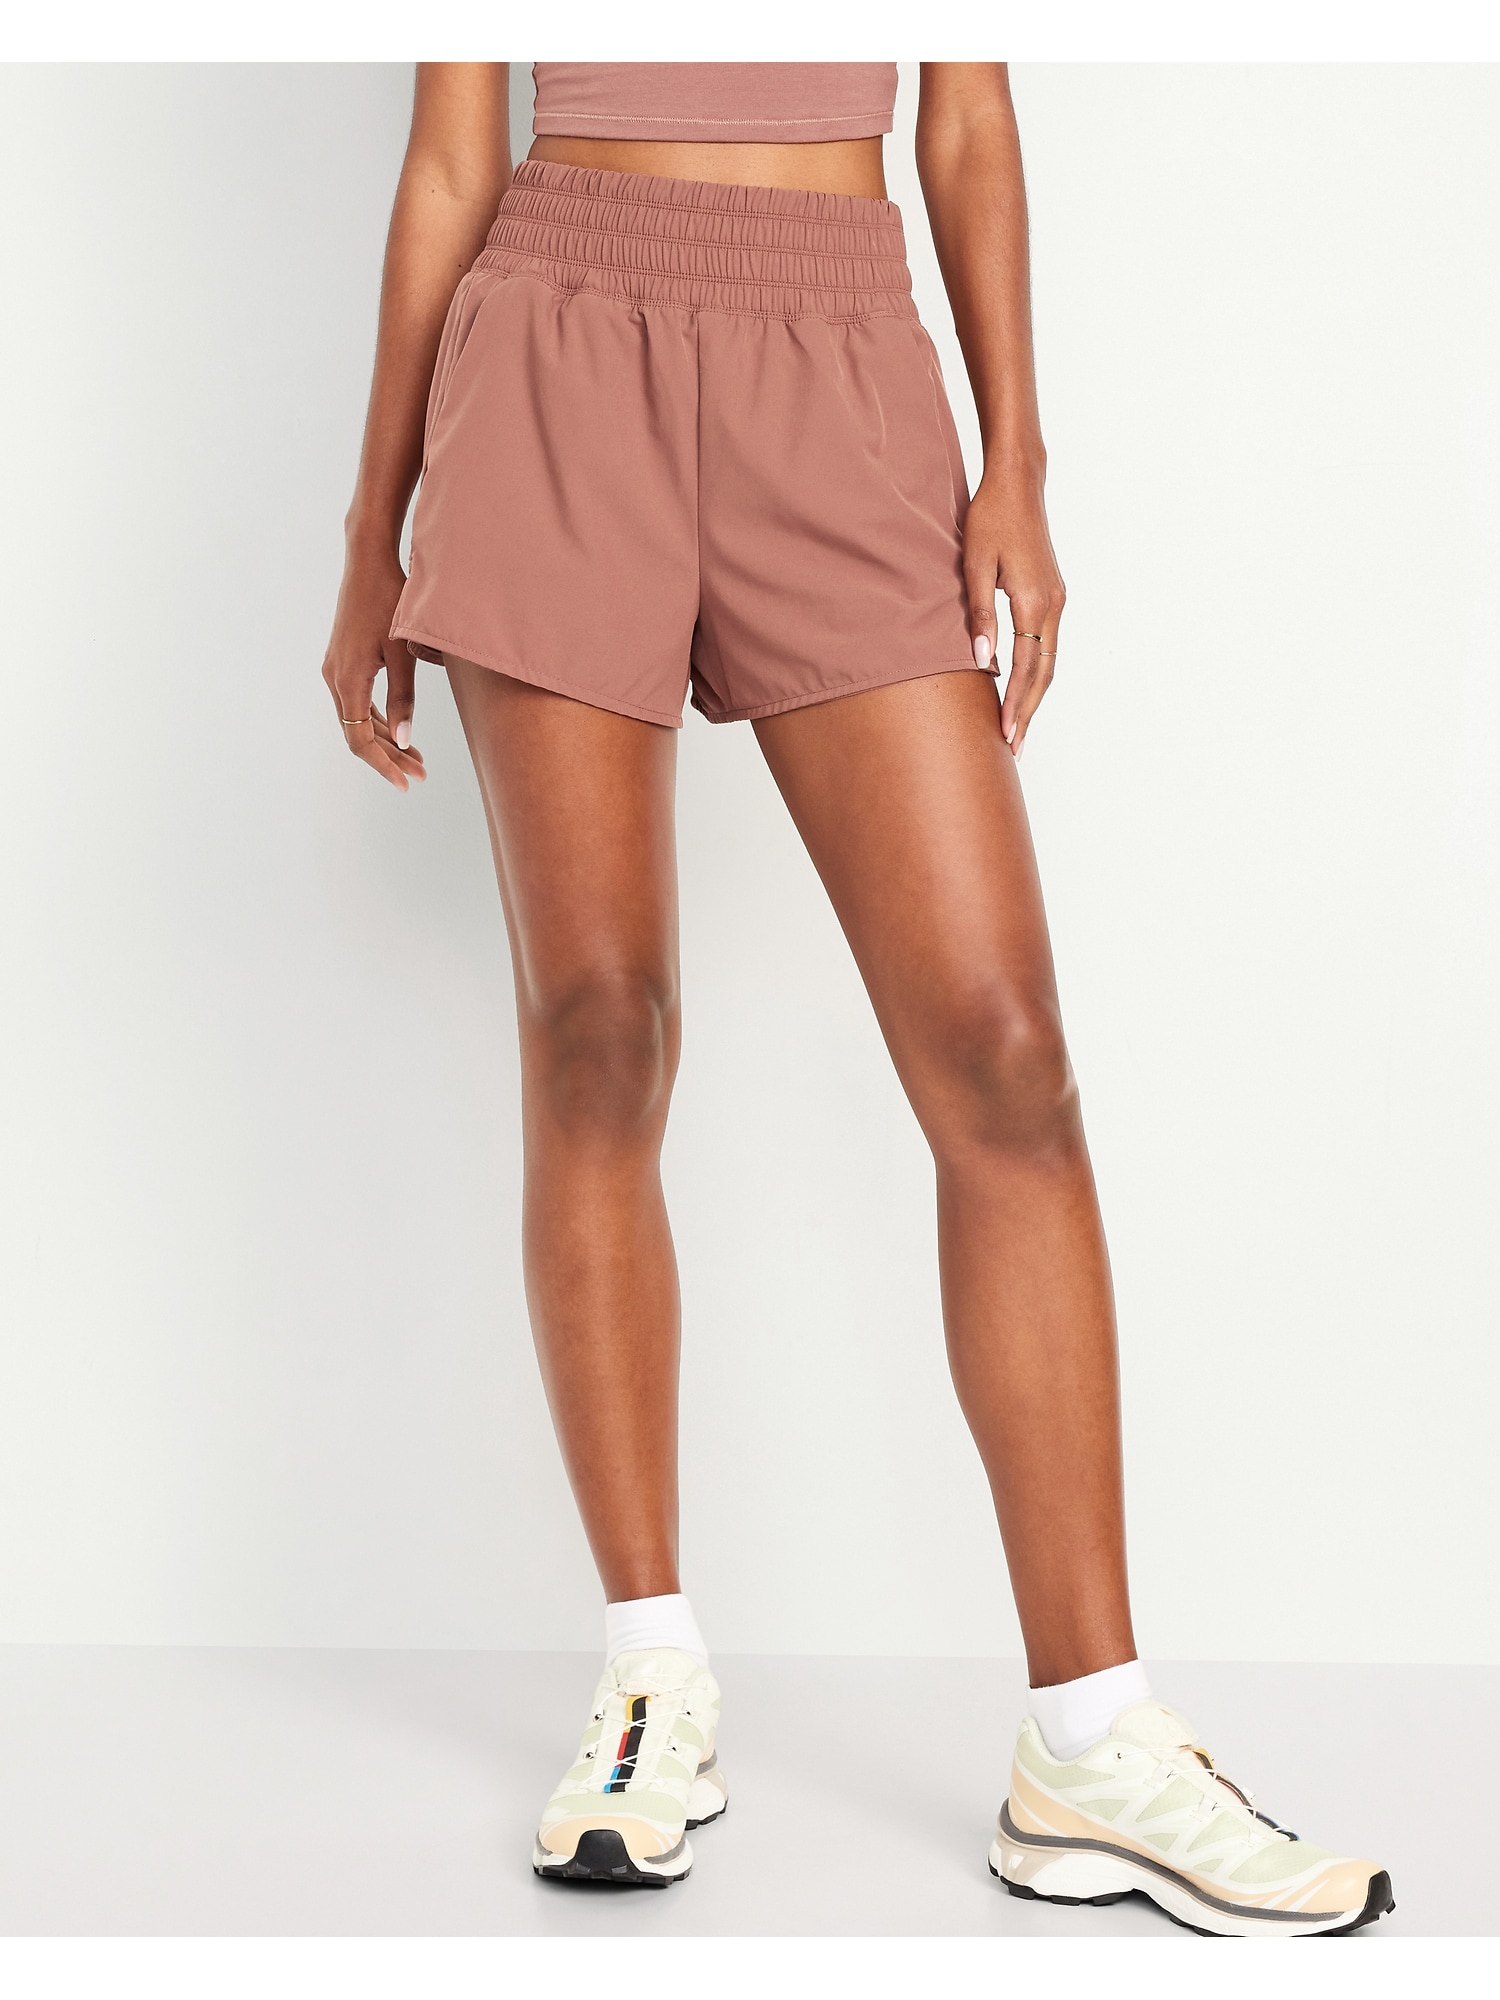 Extra High-Waisted Run Shorts -- 3-inch inseam